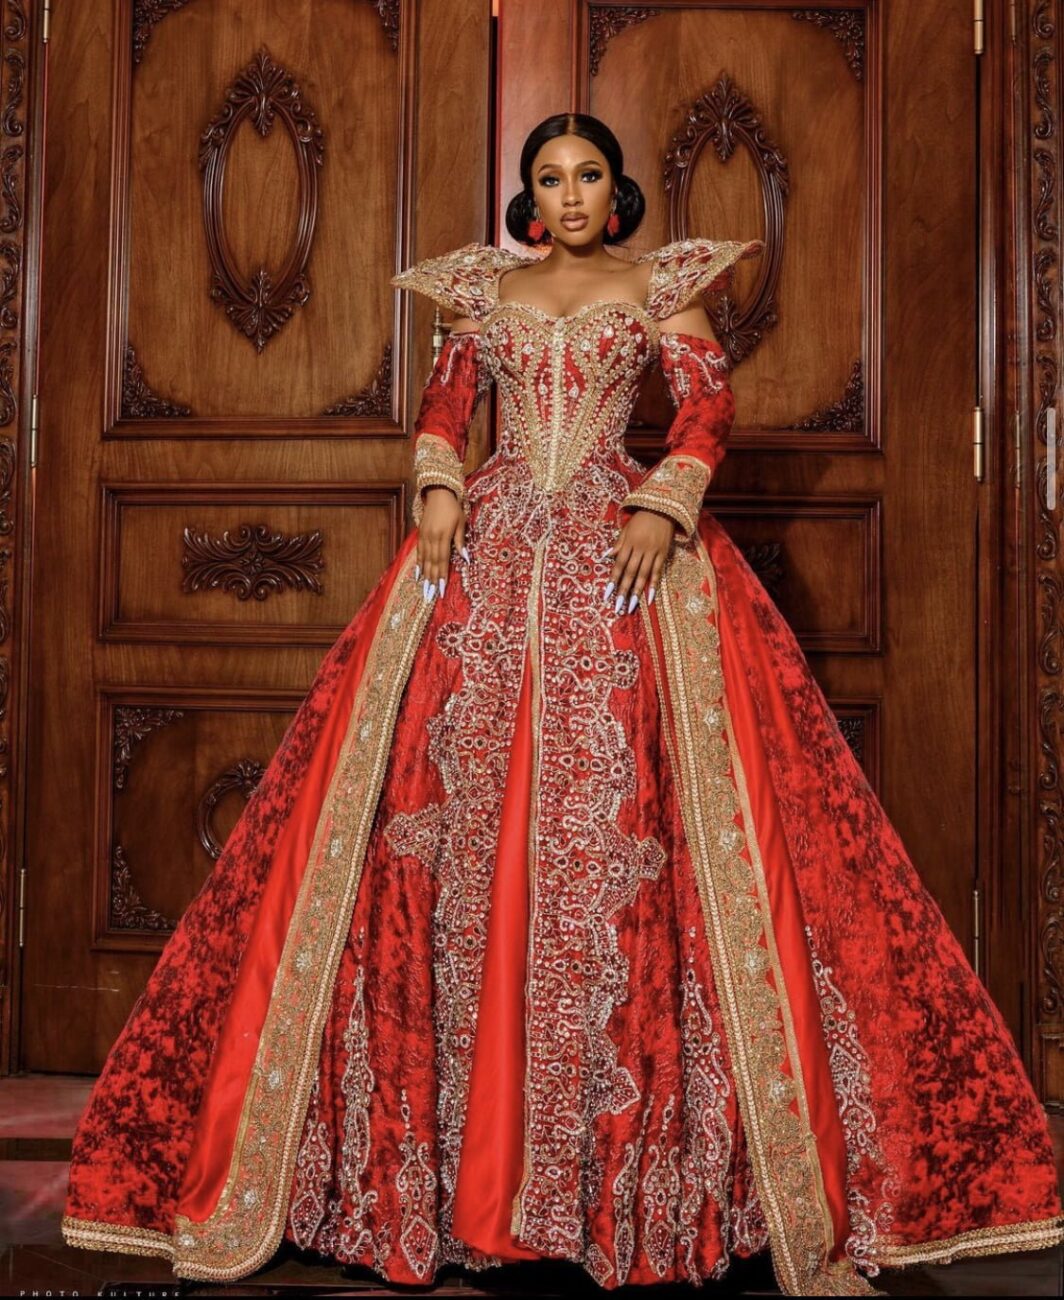 Mercy Eke in a regal looking red dress.